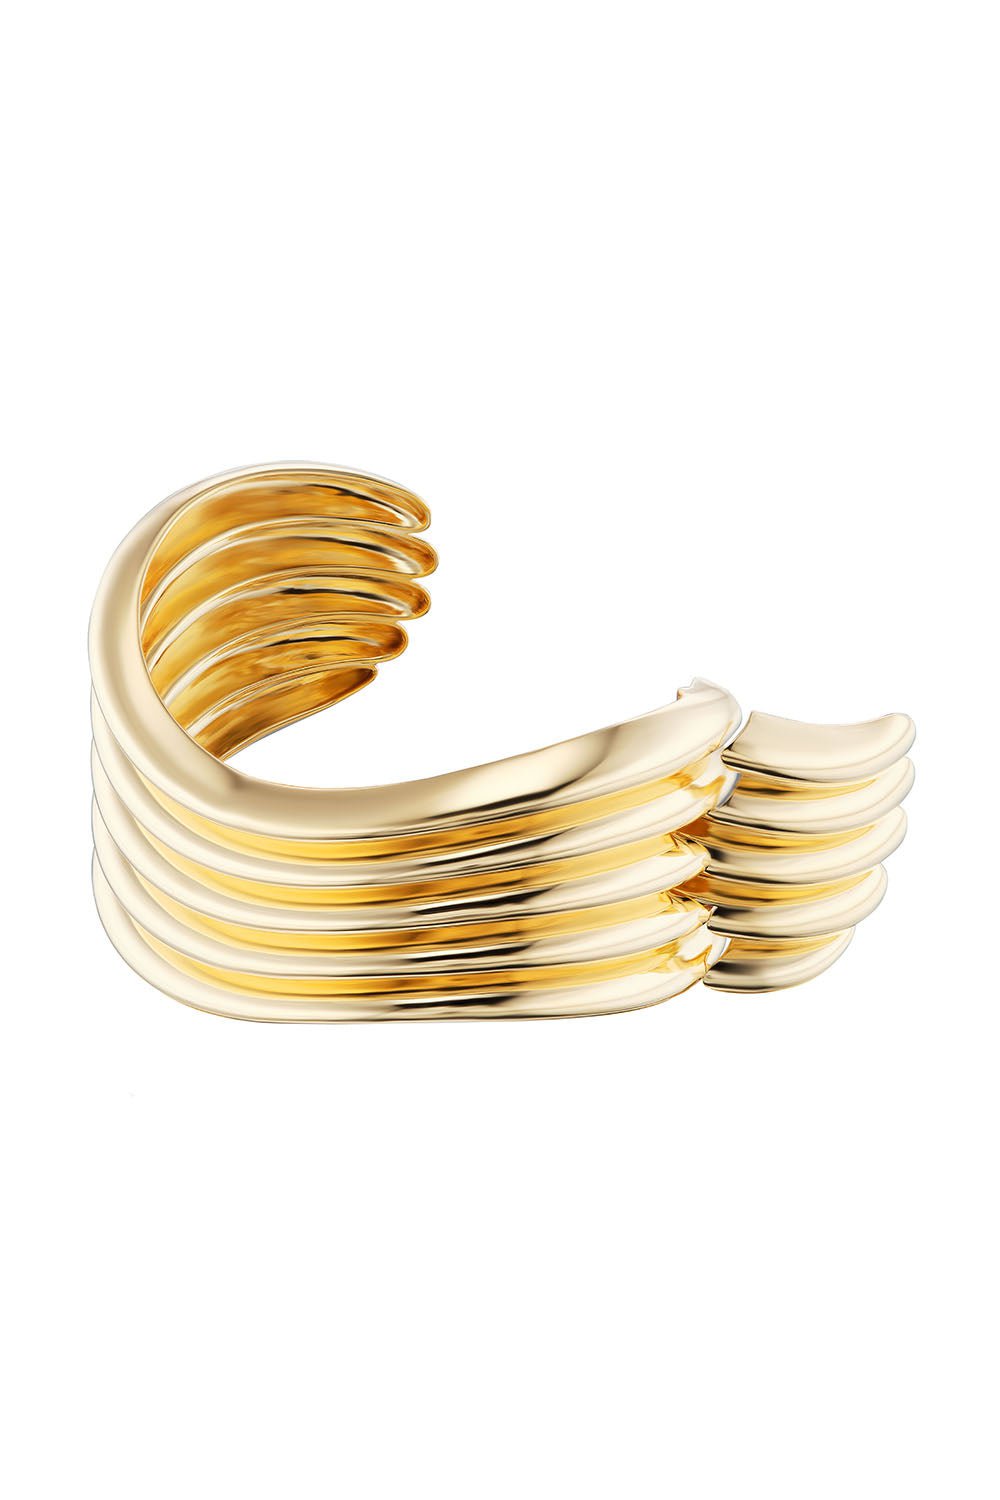 BECK JEWELS-La Ola Five Tiered Wave Cuff Bracelet-YELLOW GOLD